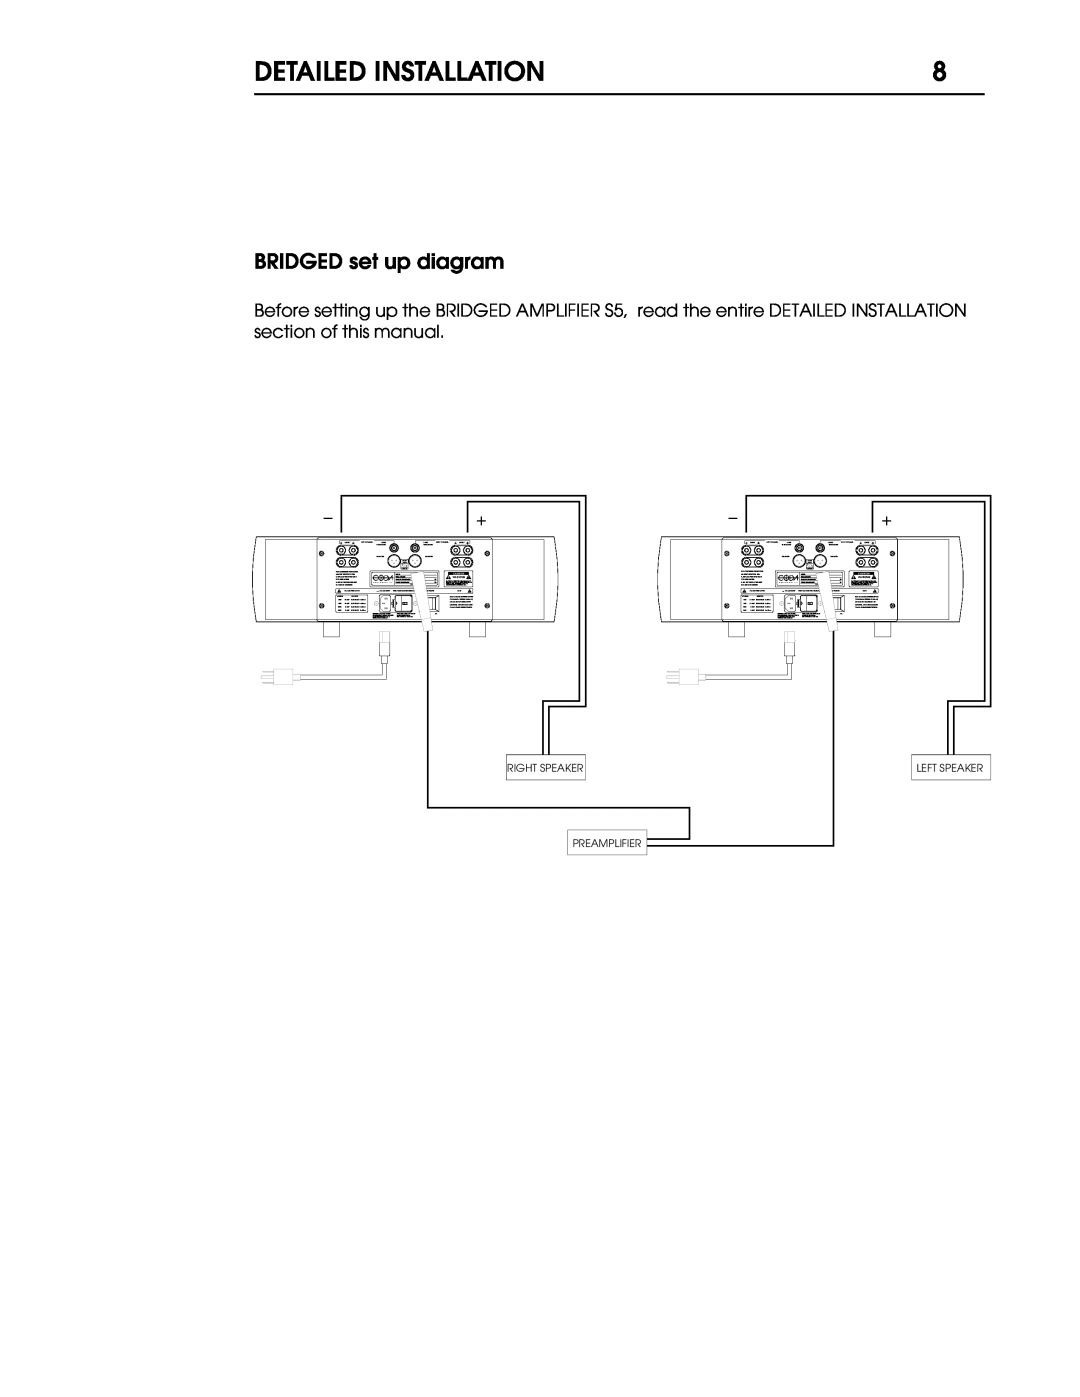 Coda S5 operation manual Detailed Installation, BRIDGED set up diagram, Right Speaker, Left Speaker, Preamplifier 